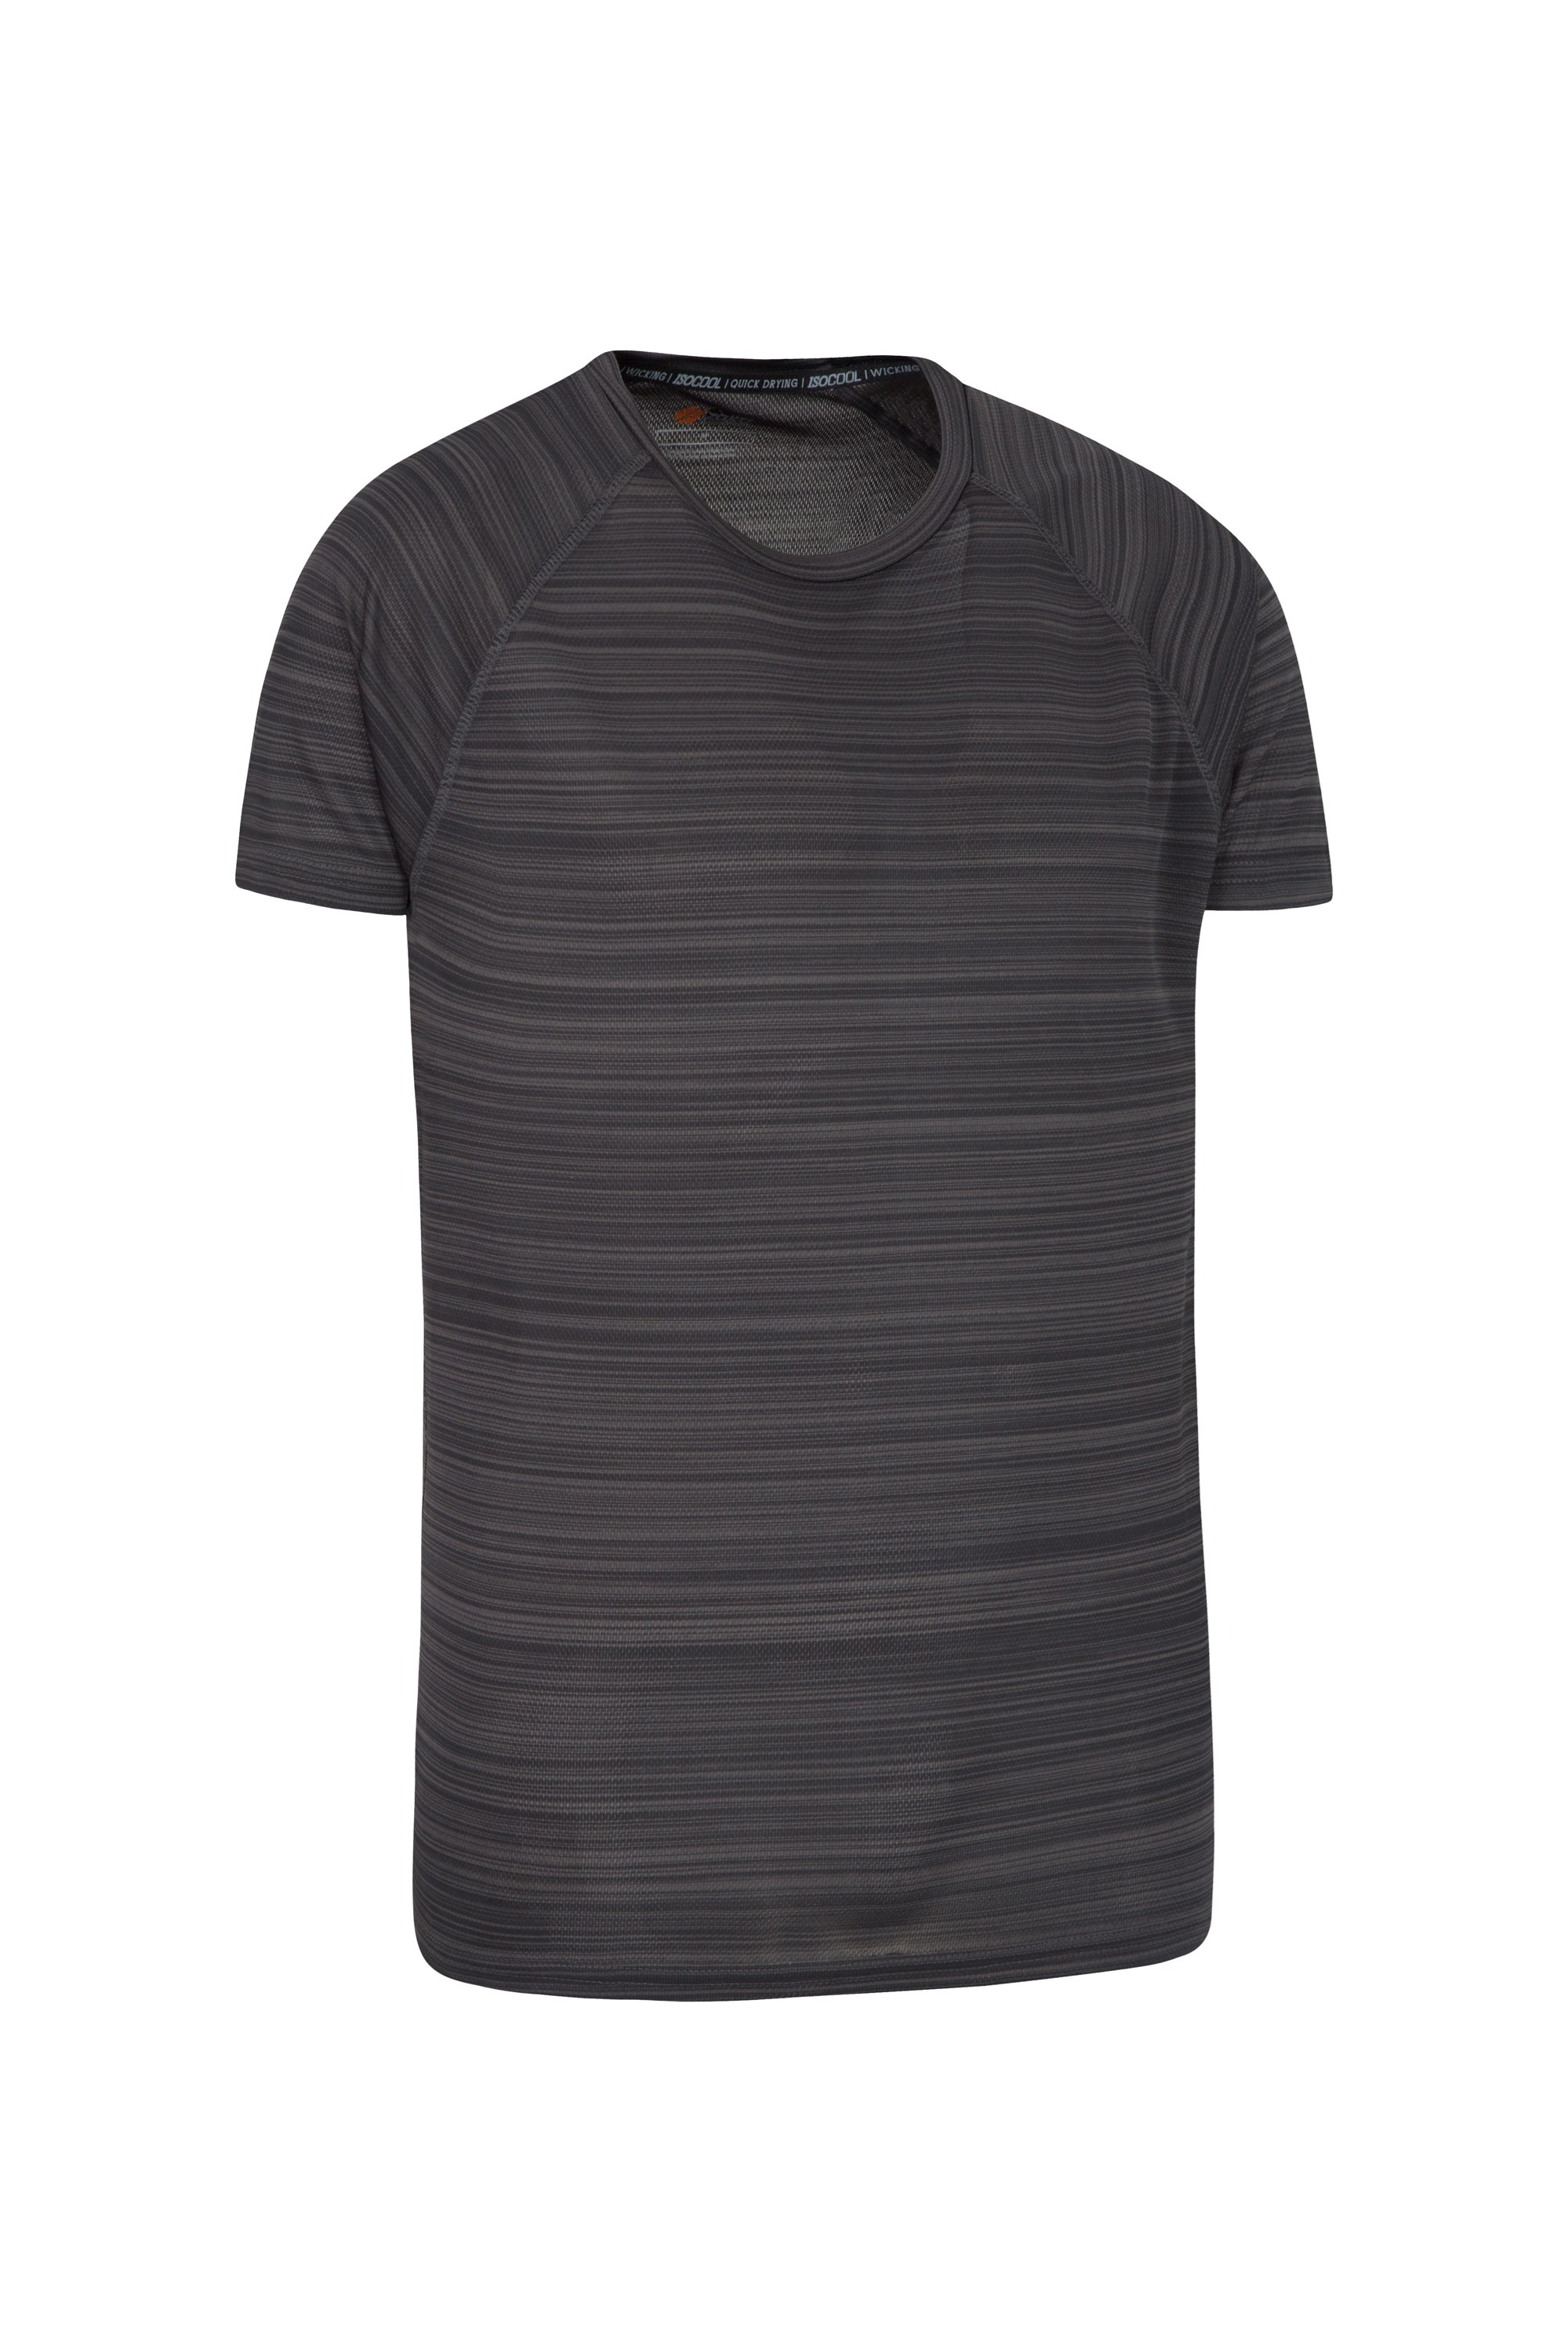 Endurance Striped Mens T-Shirt | Mountain Warehouse EU